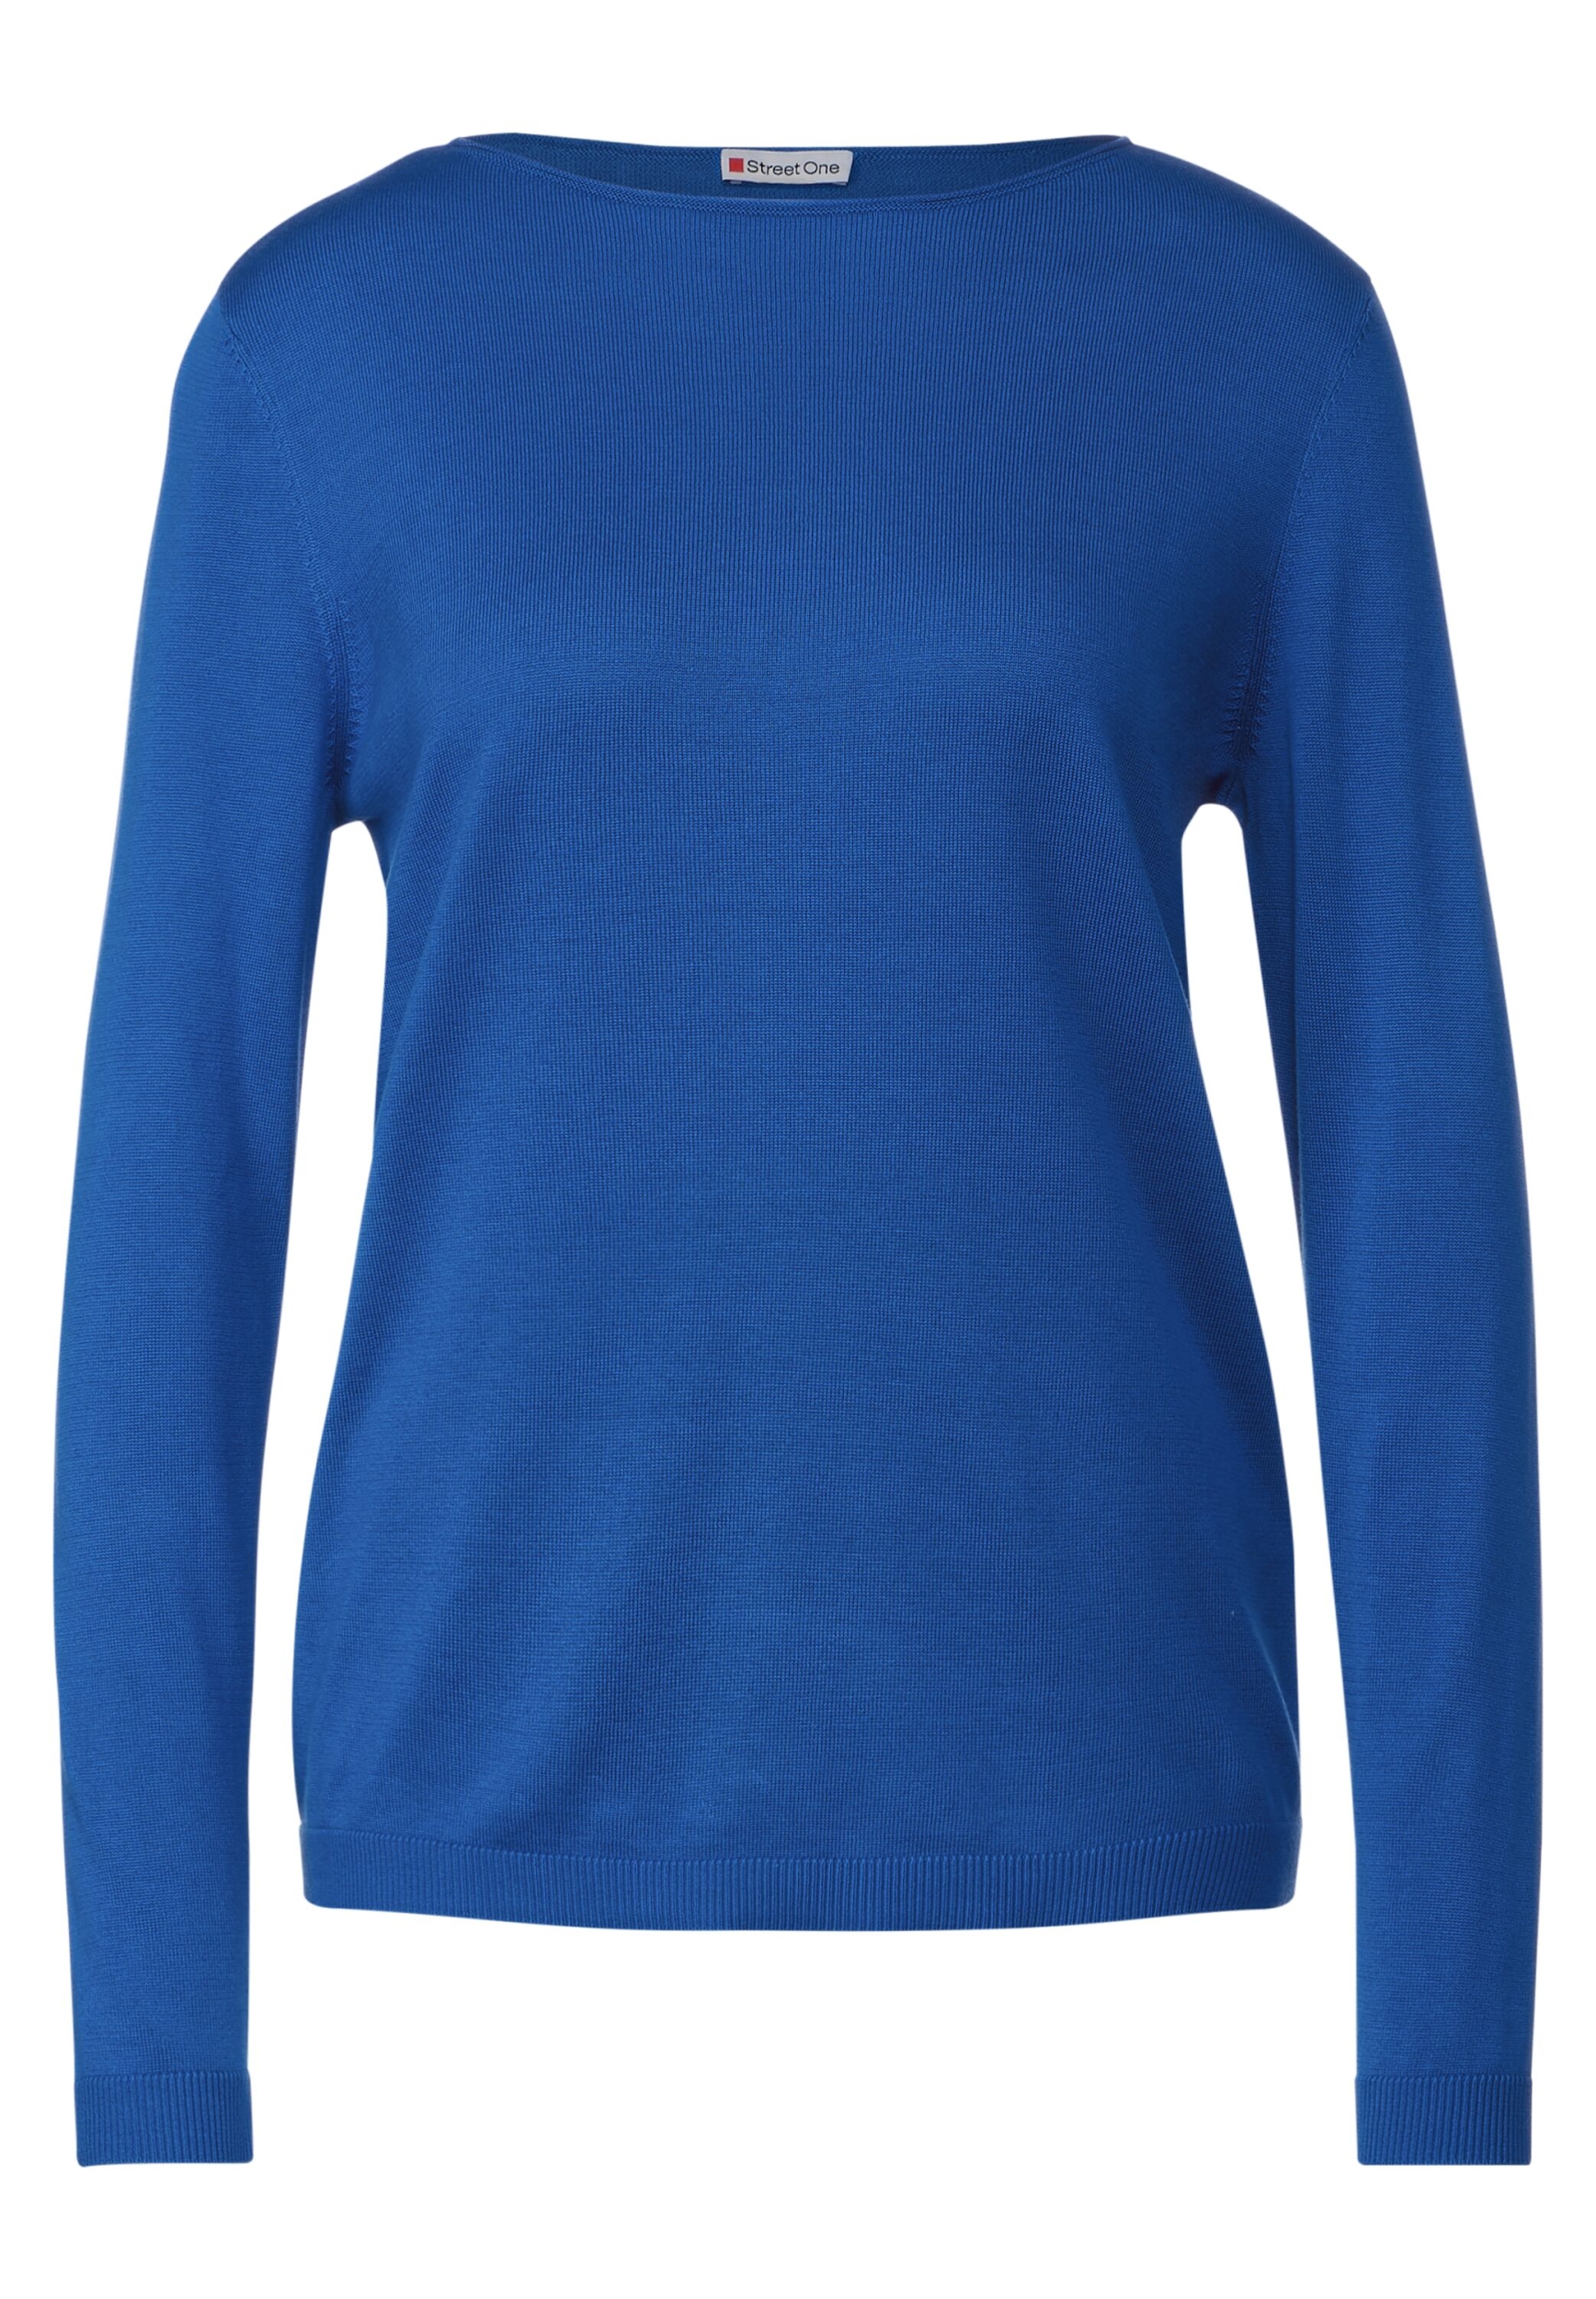 LTD QR | A302548-15377-34 intense blue u-boat | 34 basic gentle | sweater fresh